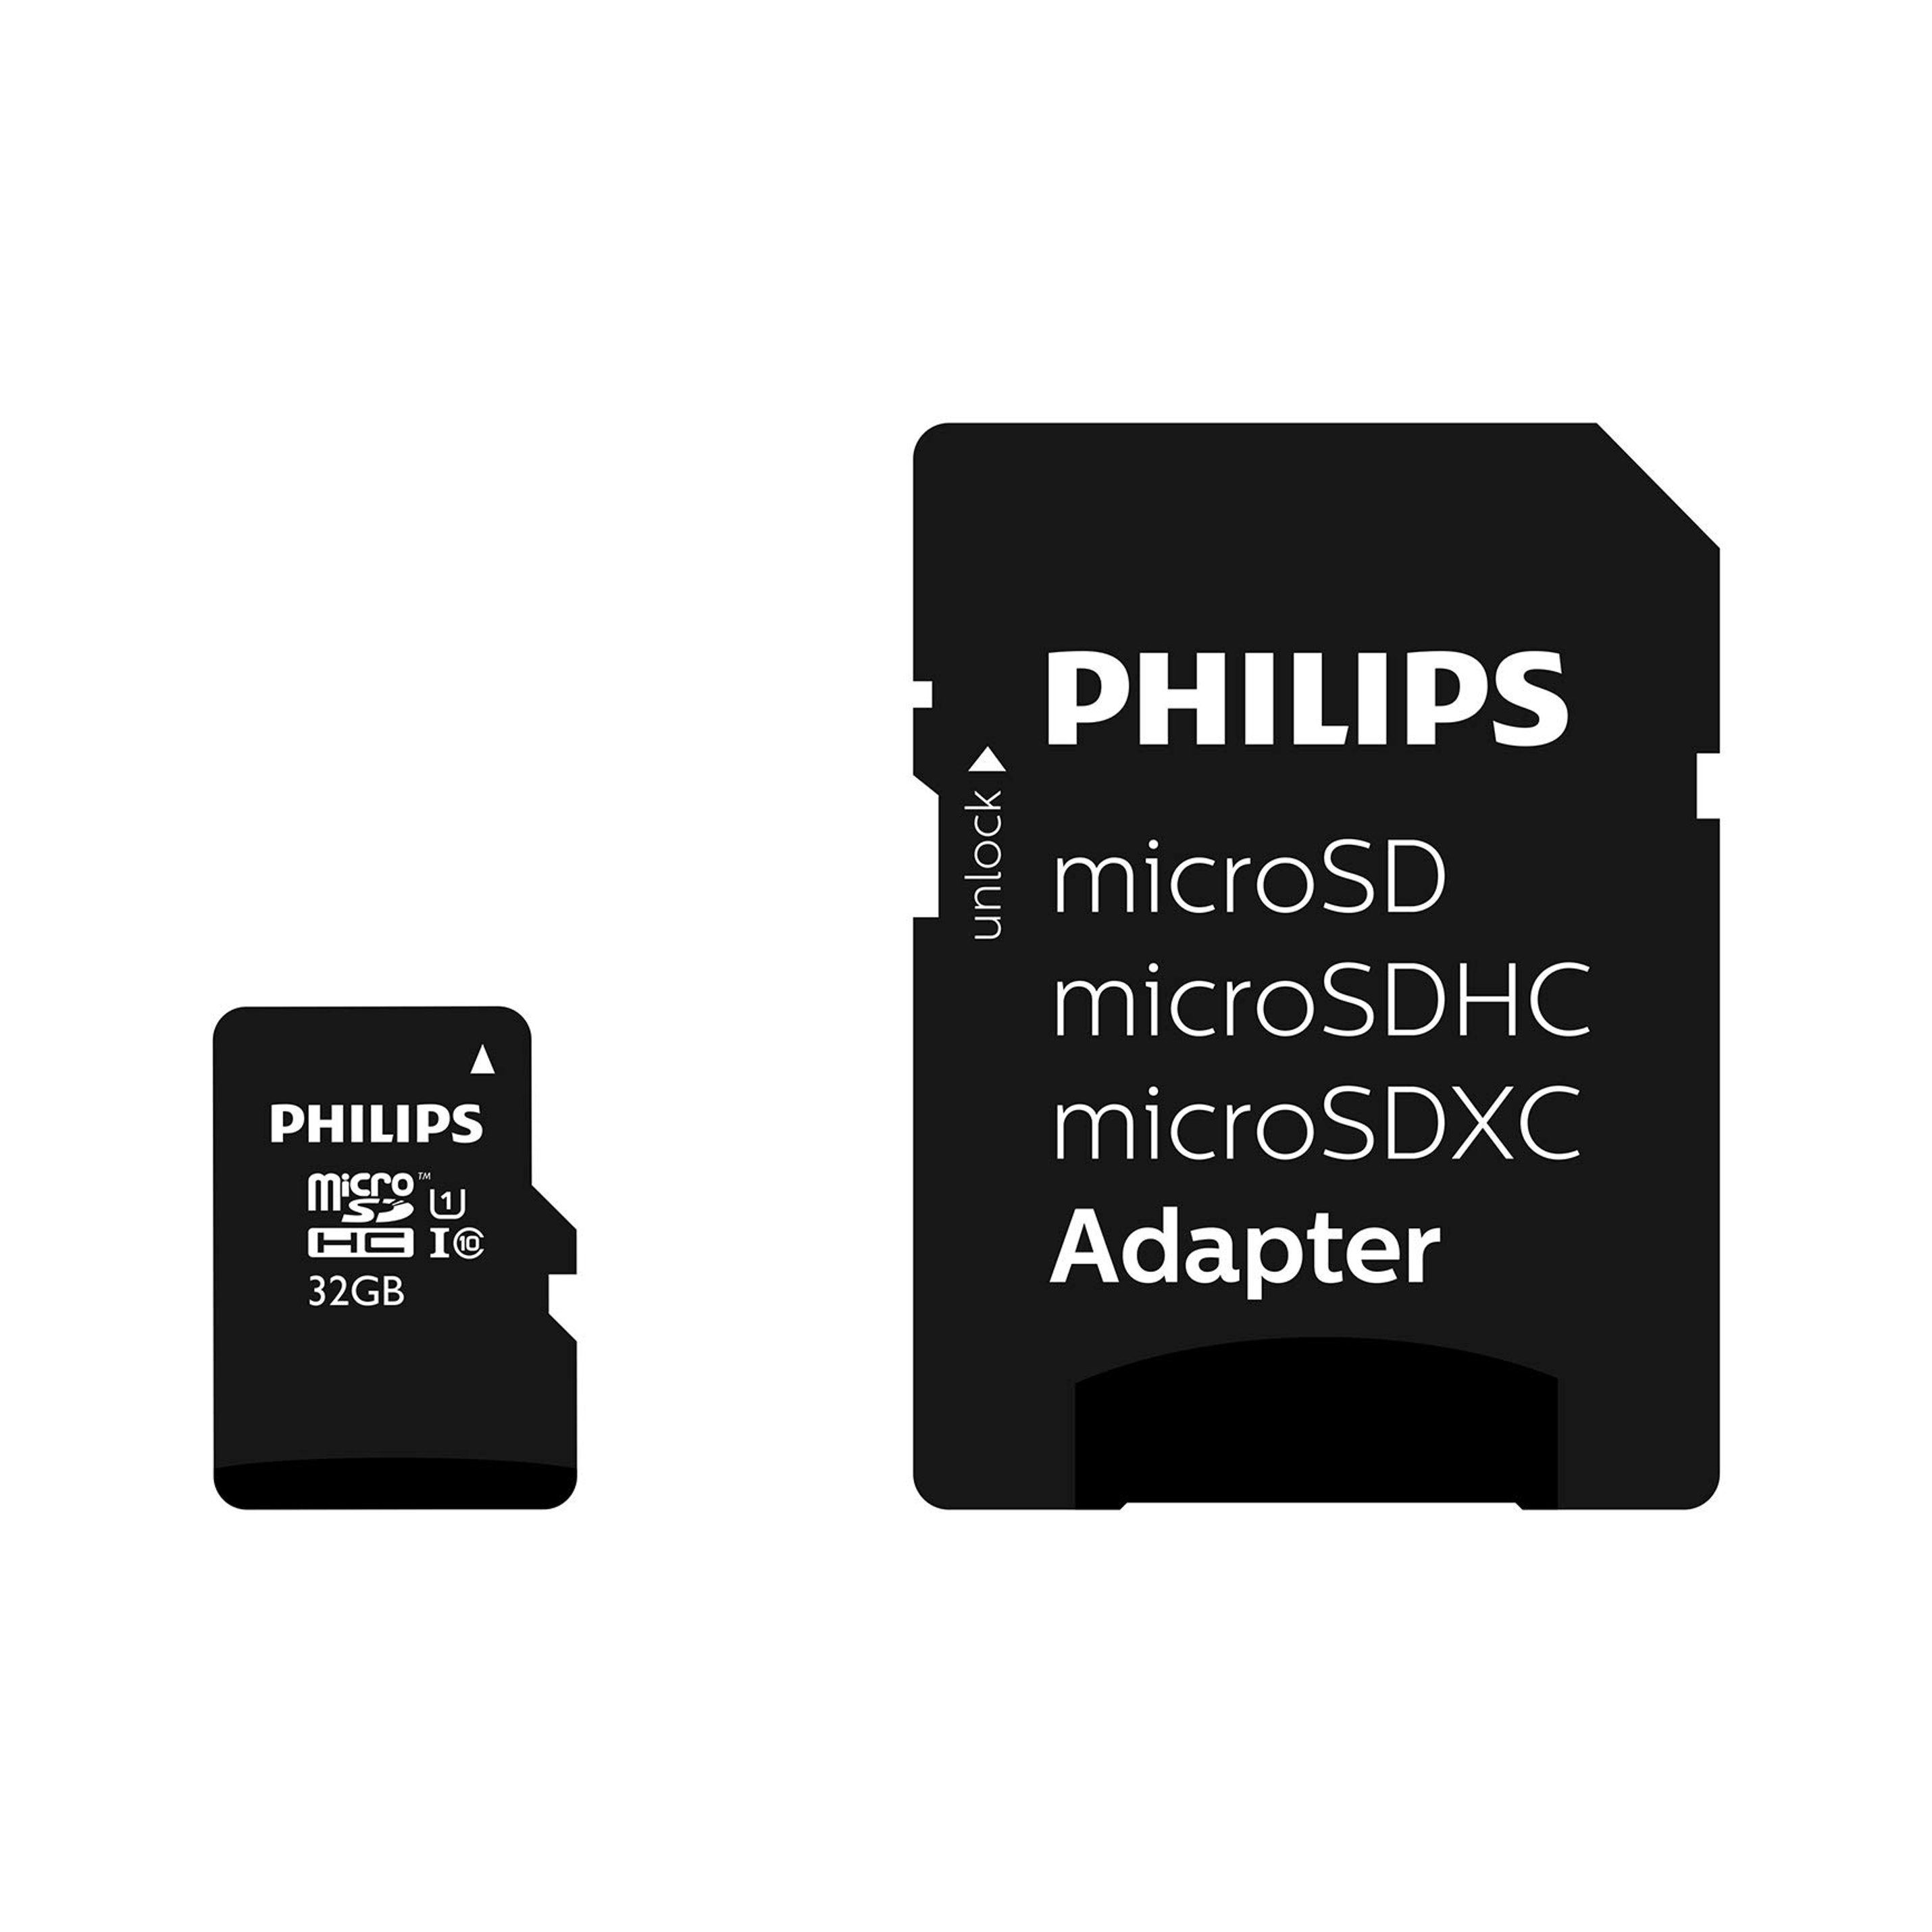 UI, Class Speicherkarte, 32 Micro-SDHC Micro-SDHC UHS-I GB, 32 80 Mbit/s Adapter, PHILIPS 10,